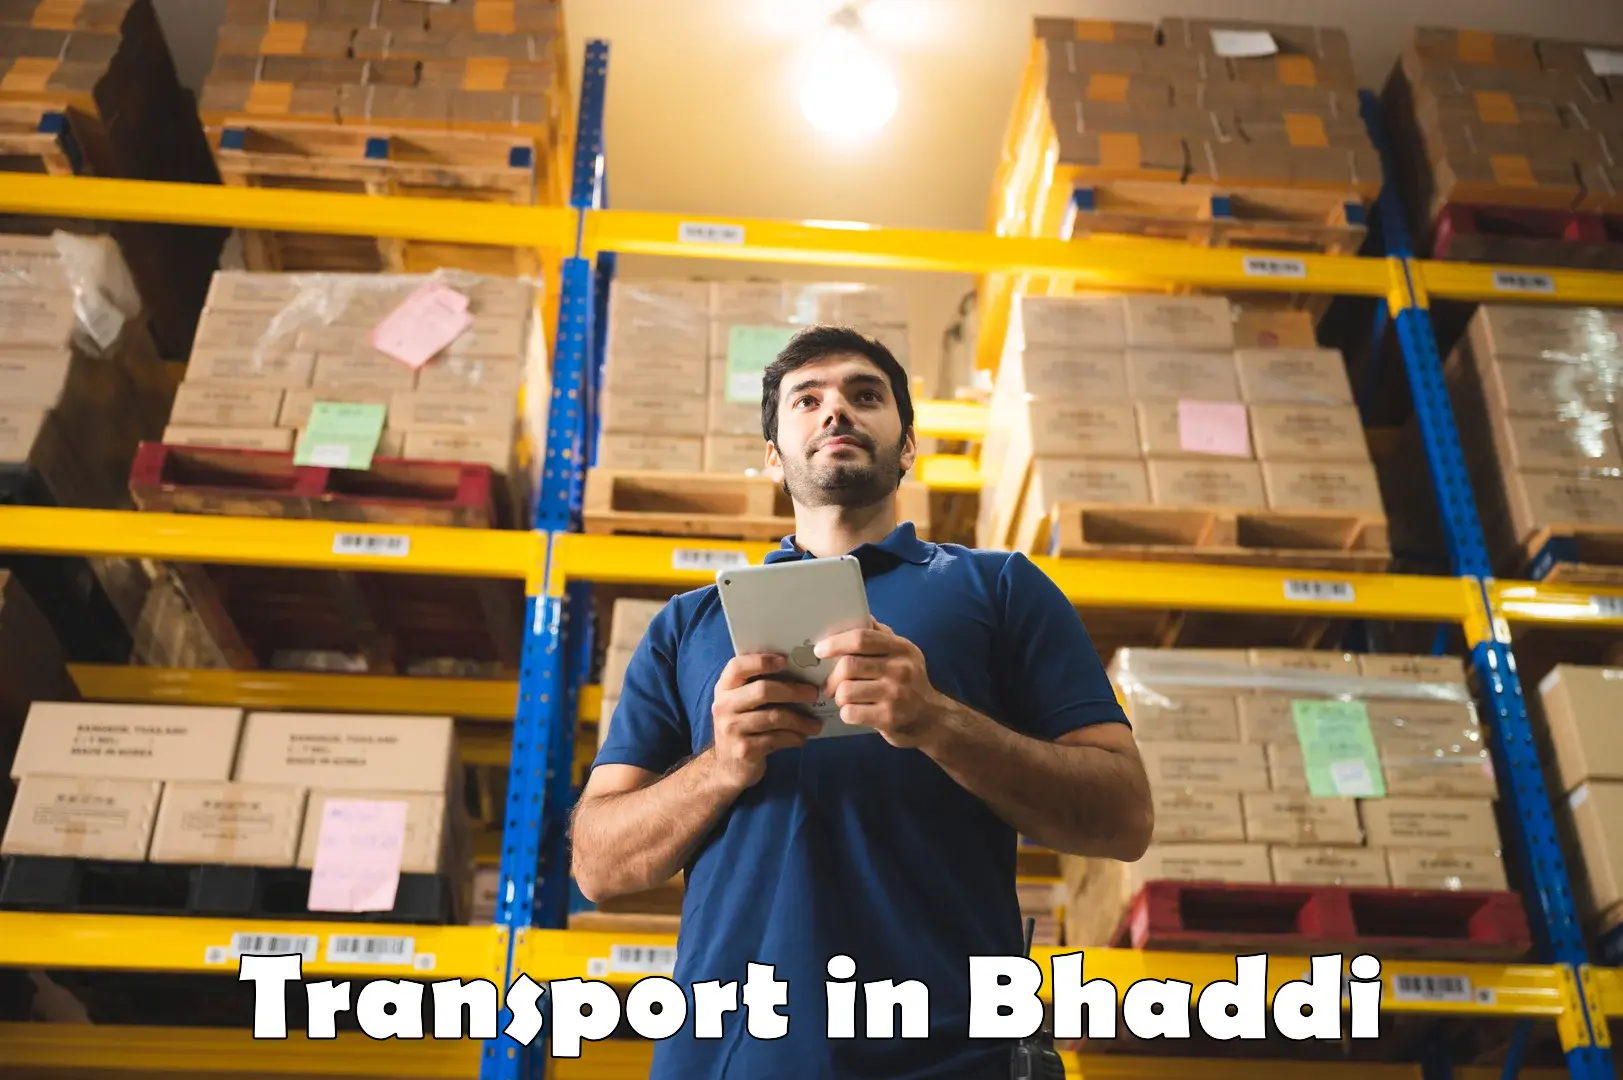 Delivery service in Bhaddi